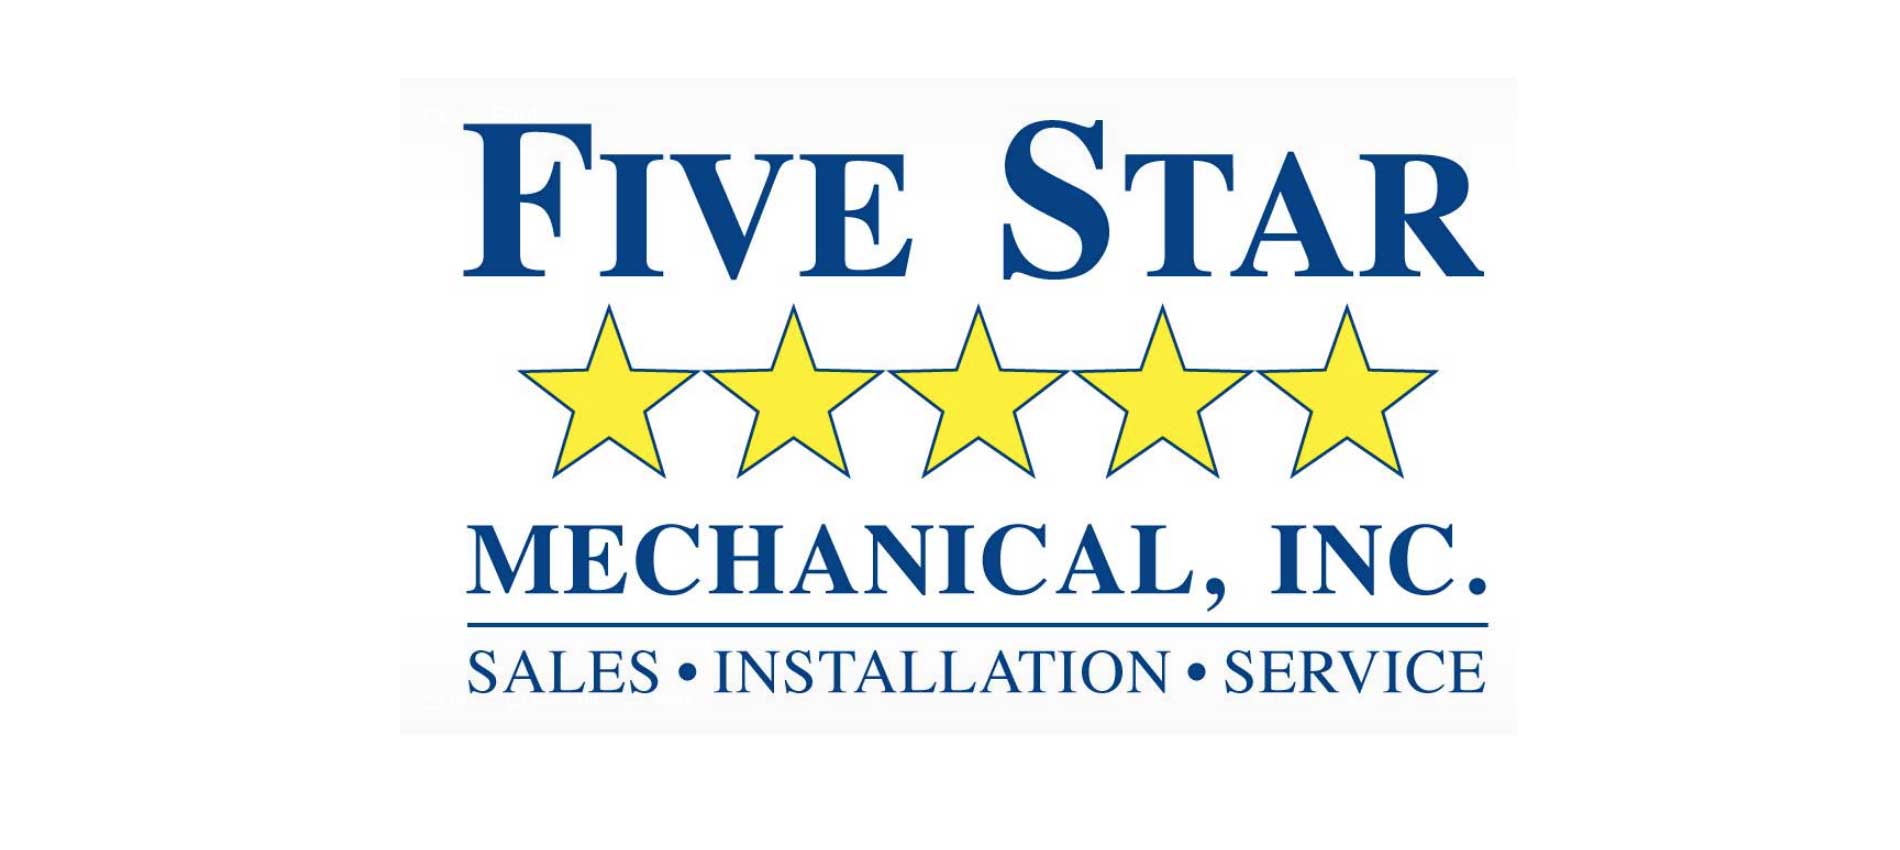 five star mechanical